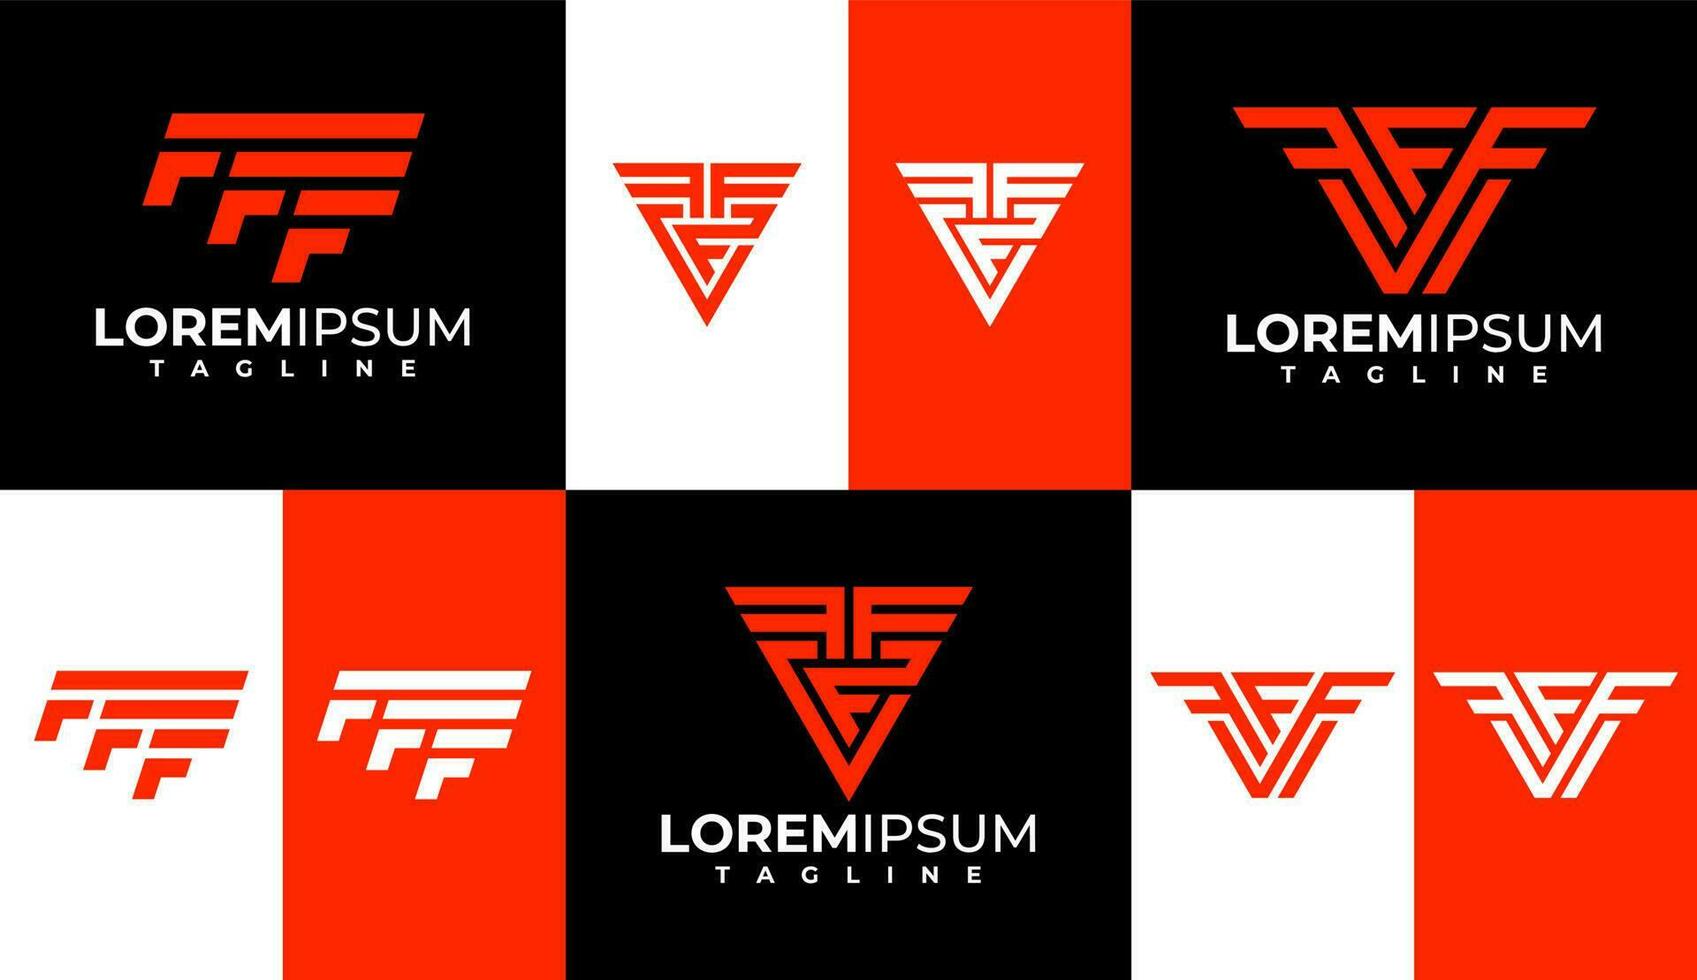 moderno empresa inicial F fff logo diseño modelo. minimalista fff logo marca. vector